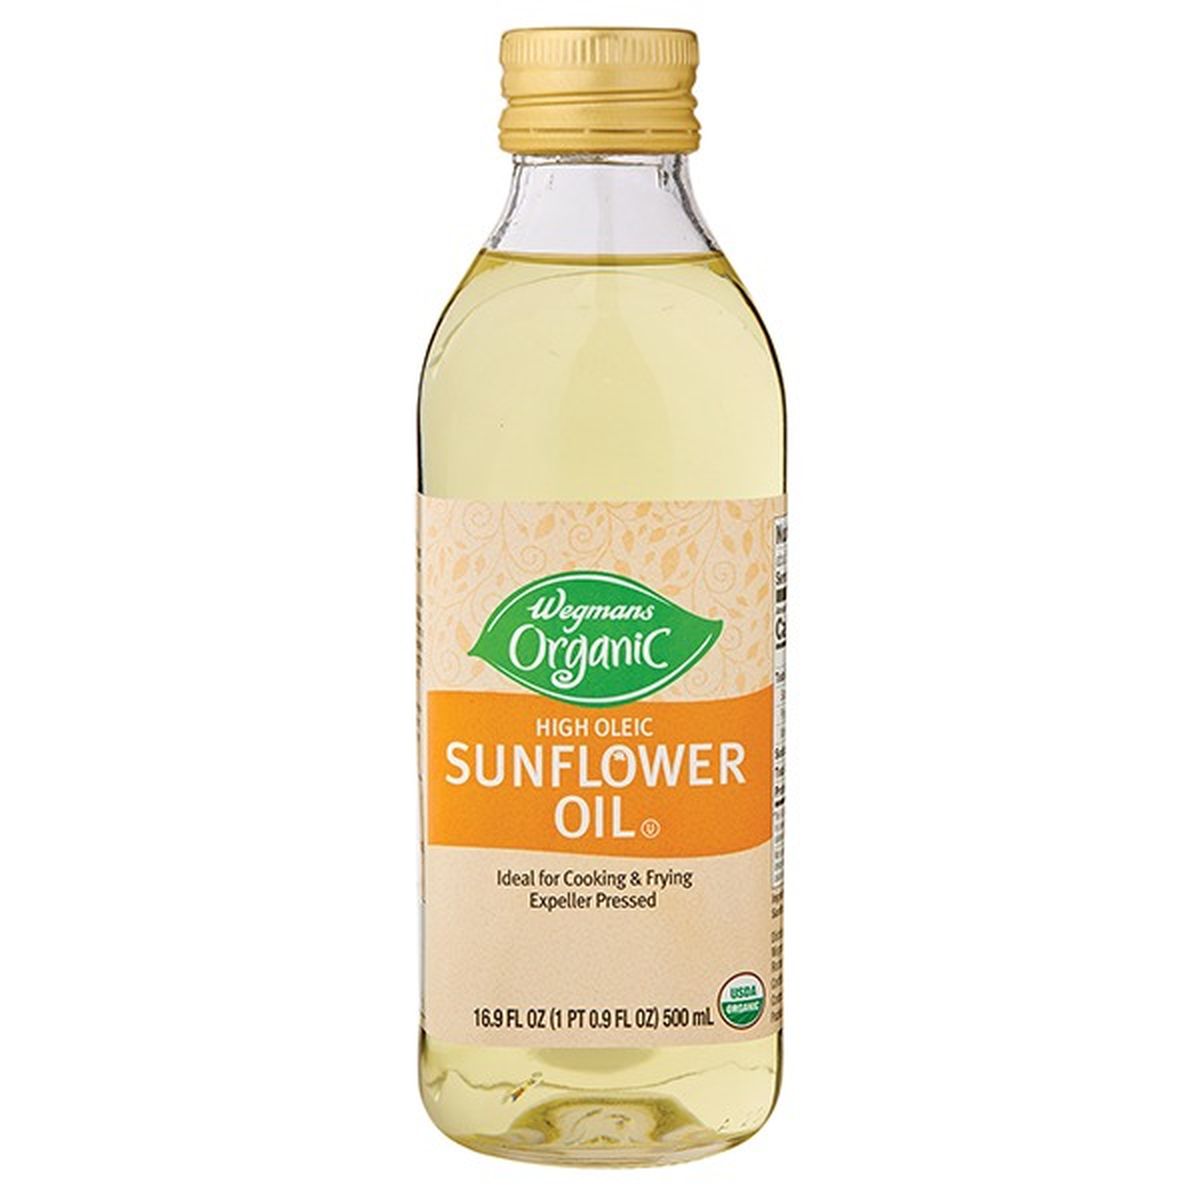 Calories in Wegmans Organic High Oleic Sunflower Oil